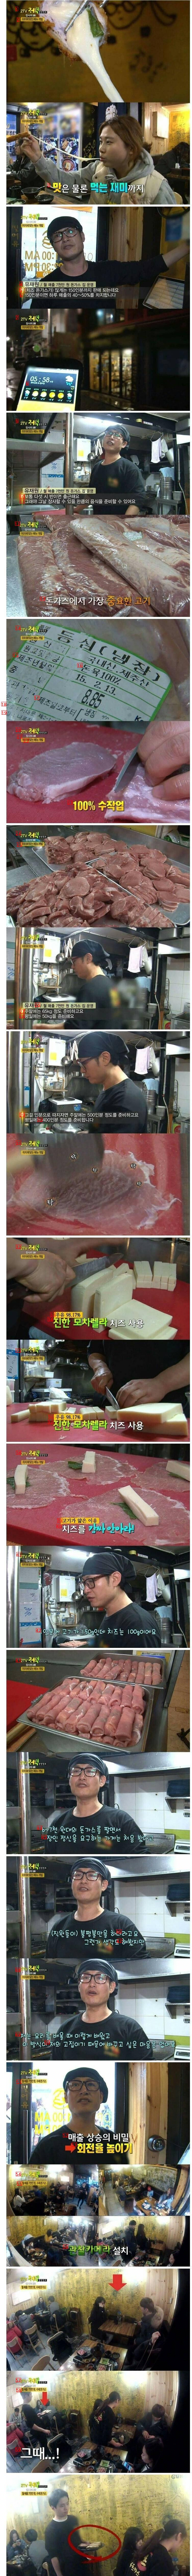 500 million won in annual sales at a pork cutlet shop.jpg